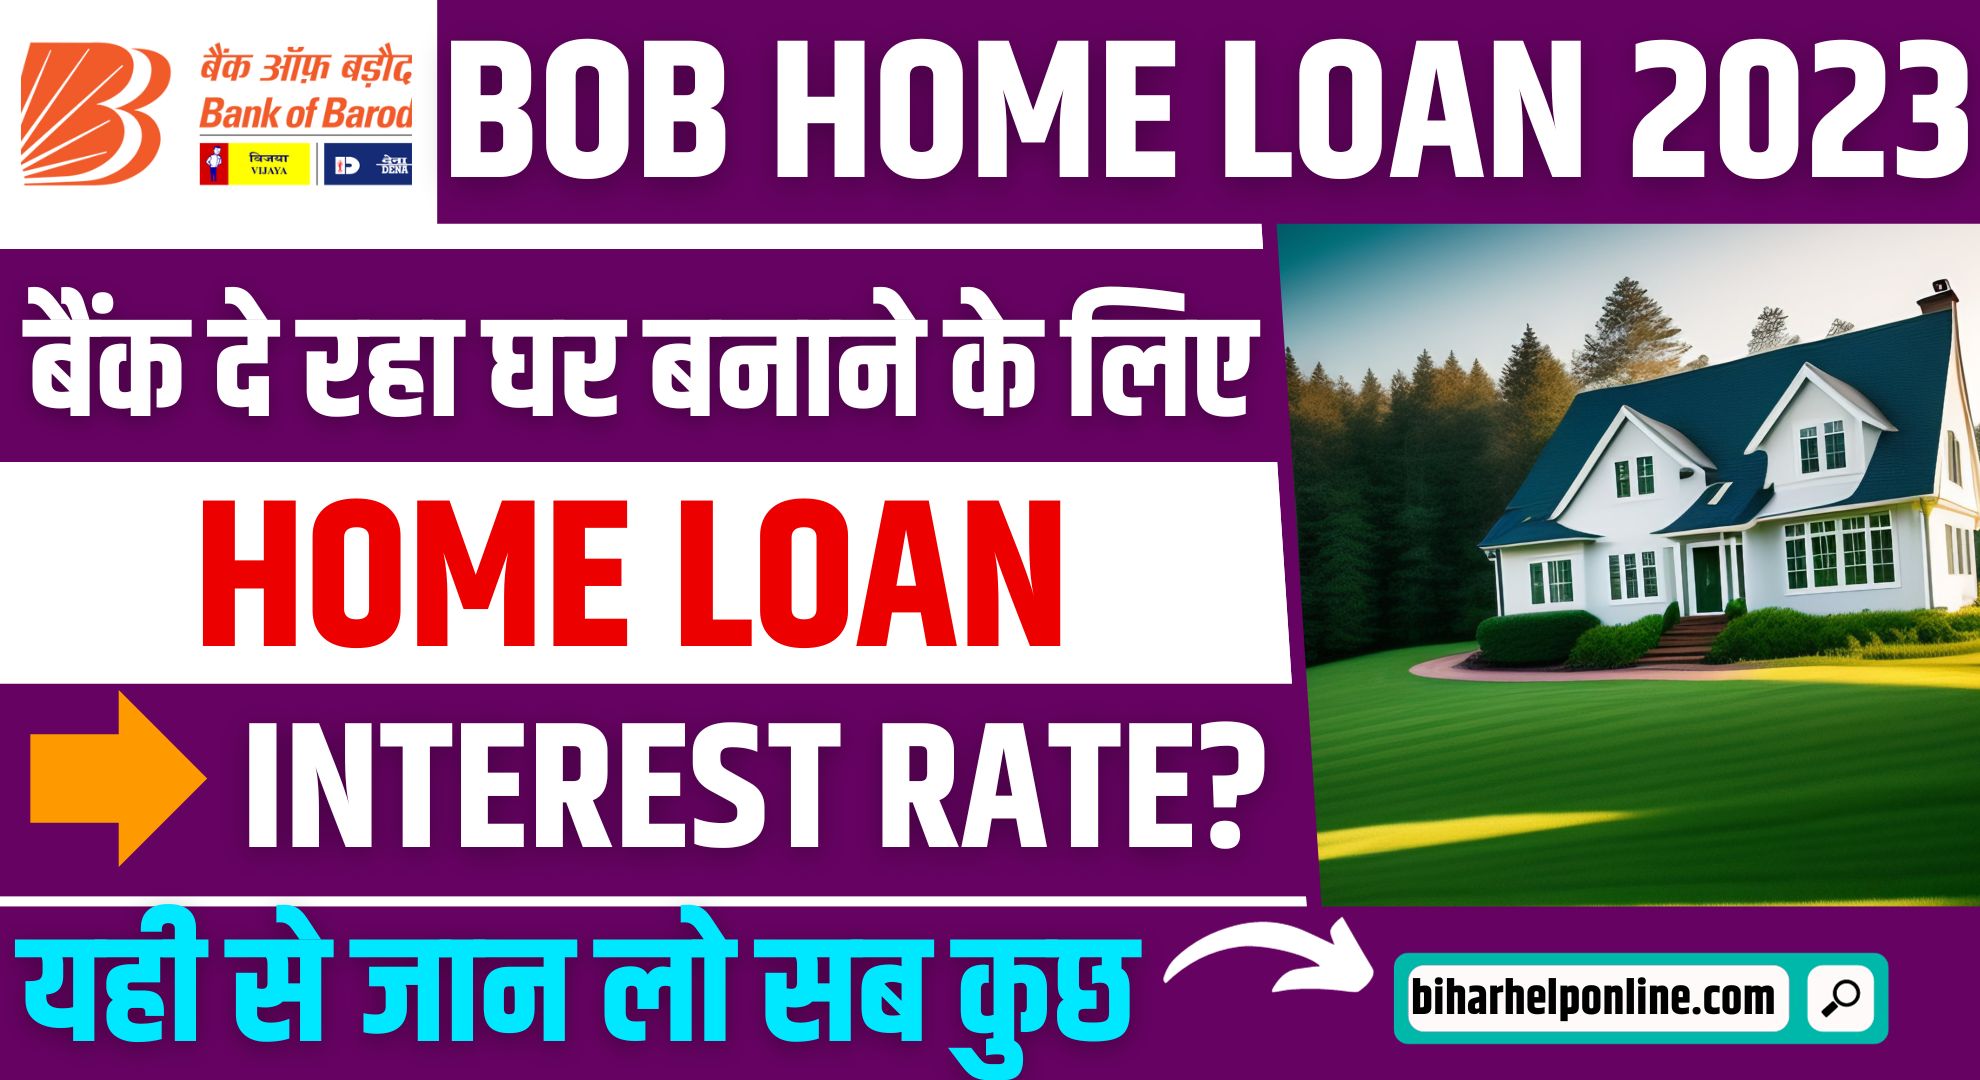 Bank of baroda home loan